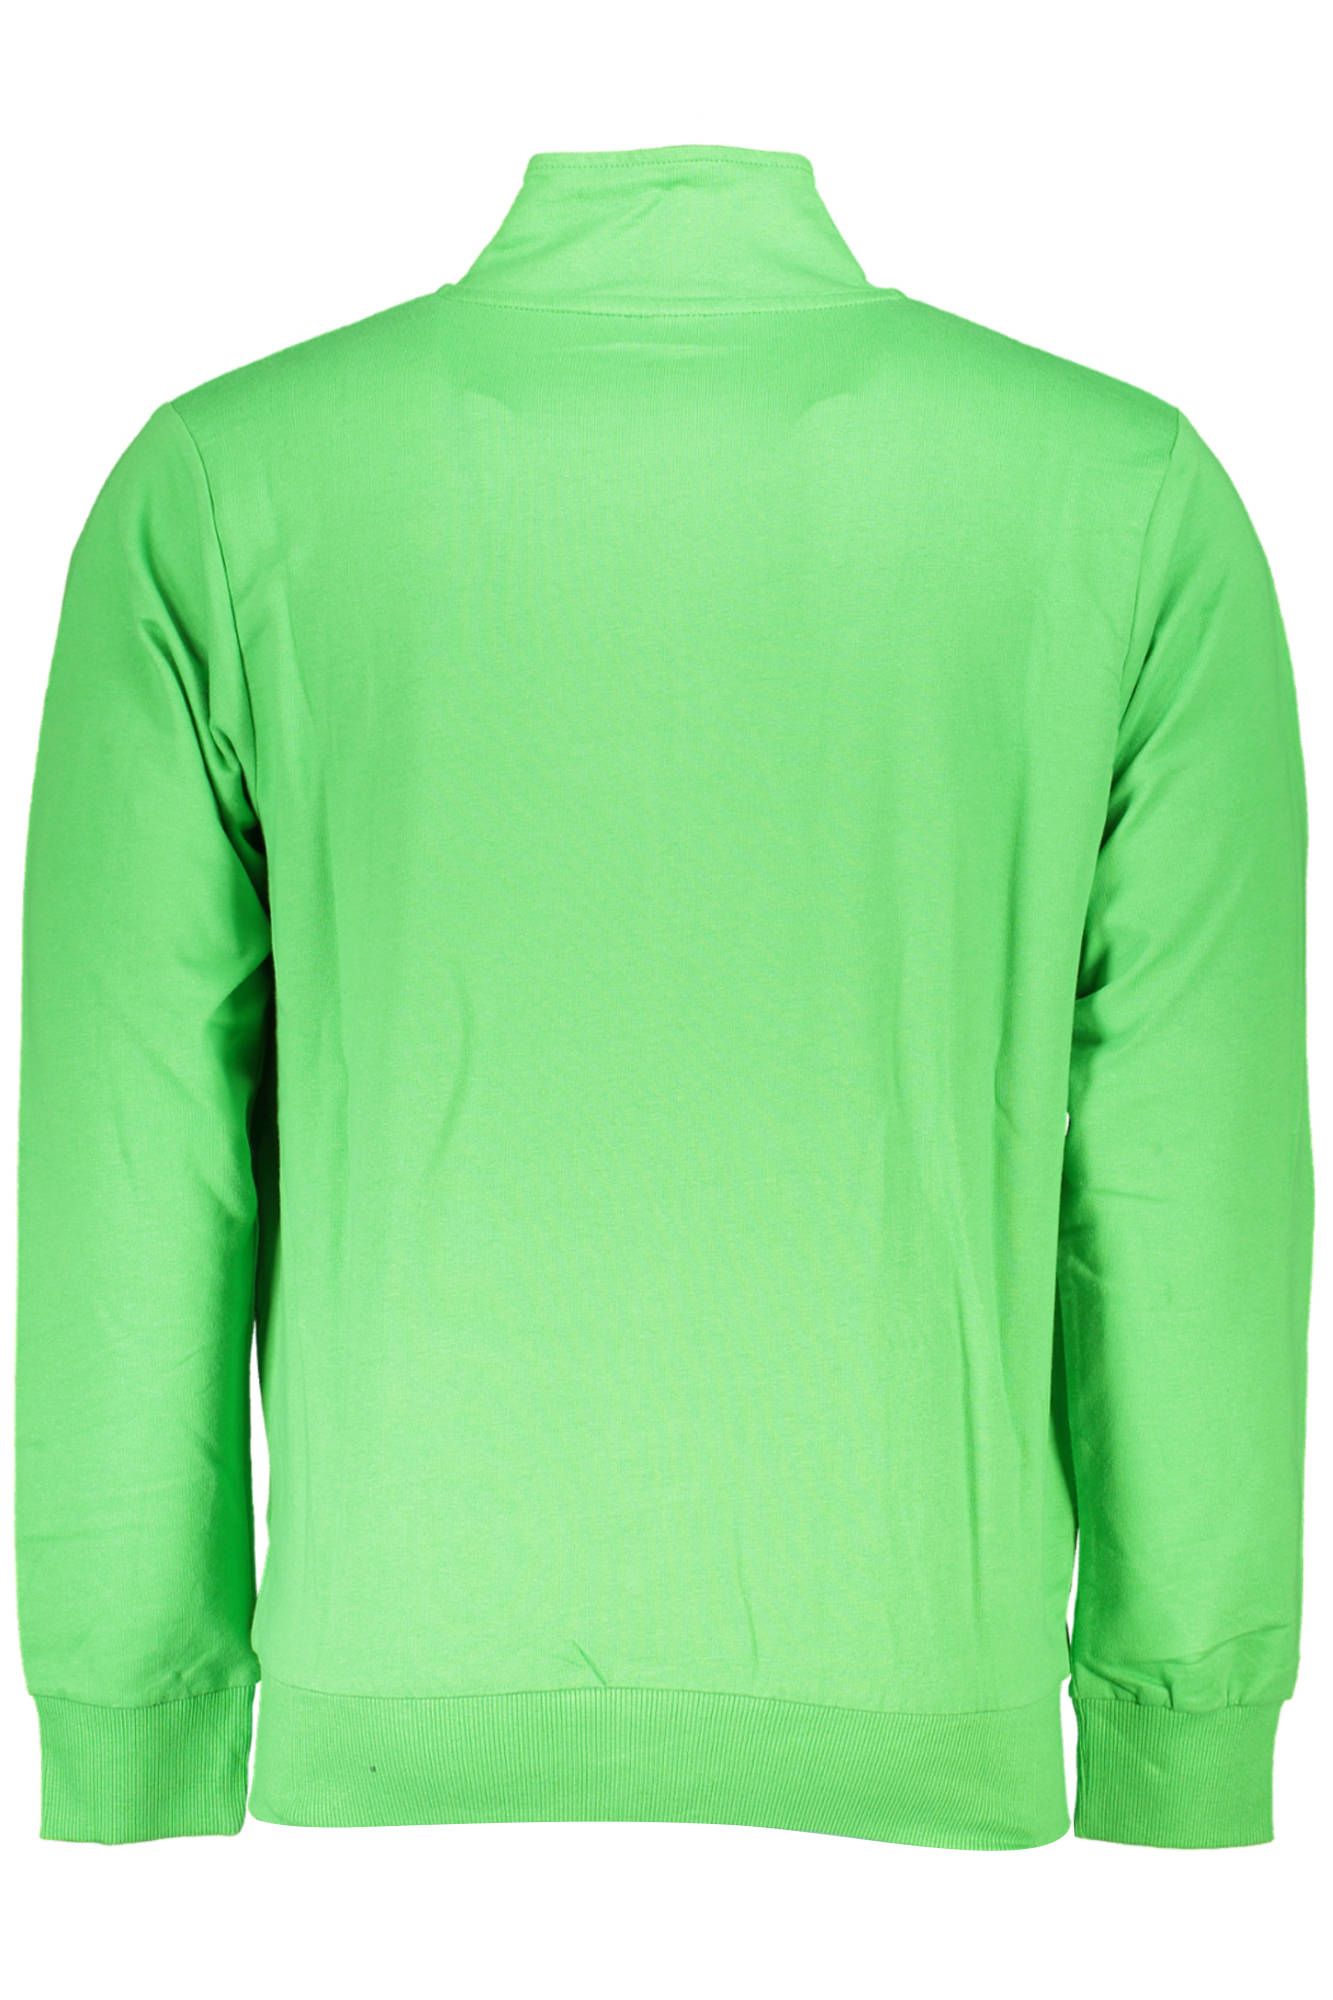 Green High Collar Embroidered Sweatshirt